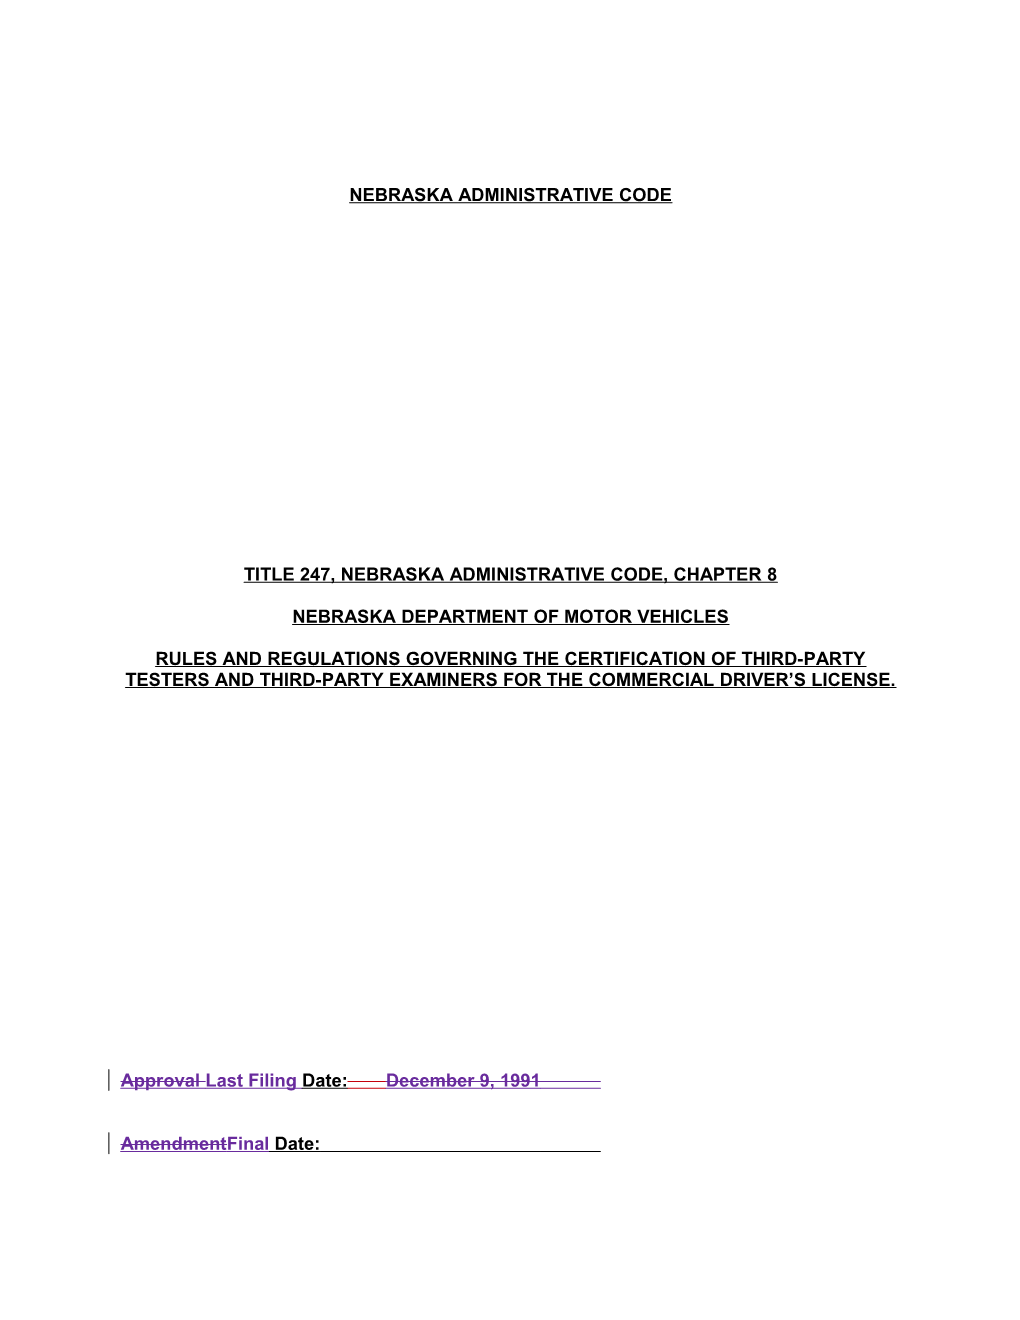 Title 247, Nebraska Administrative Code, Chapter 8